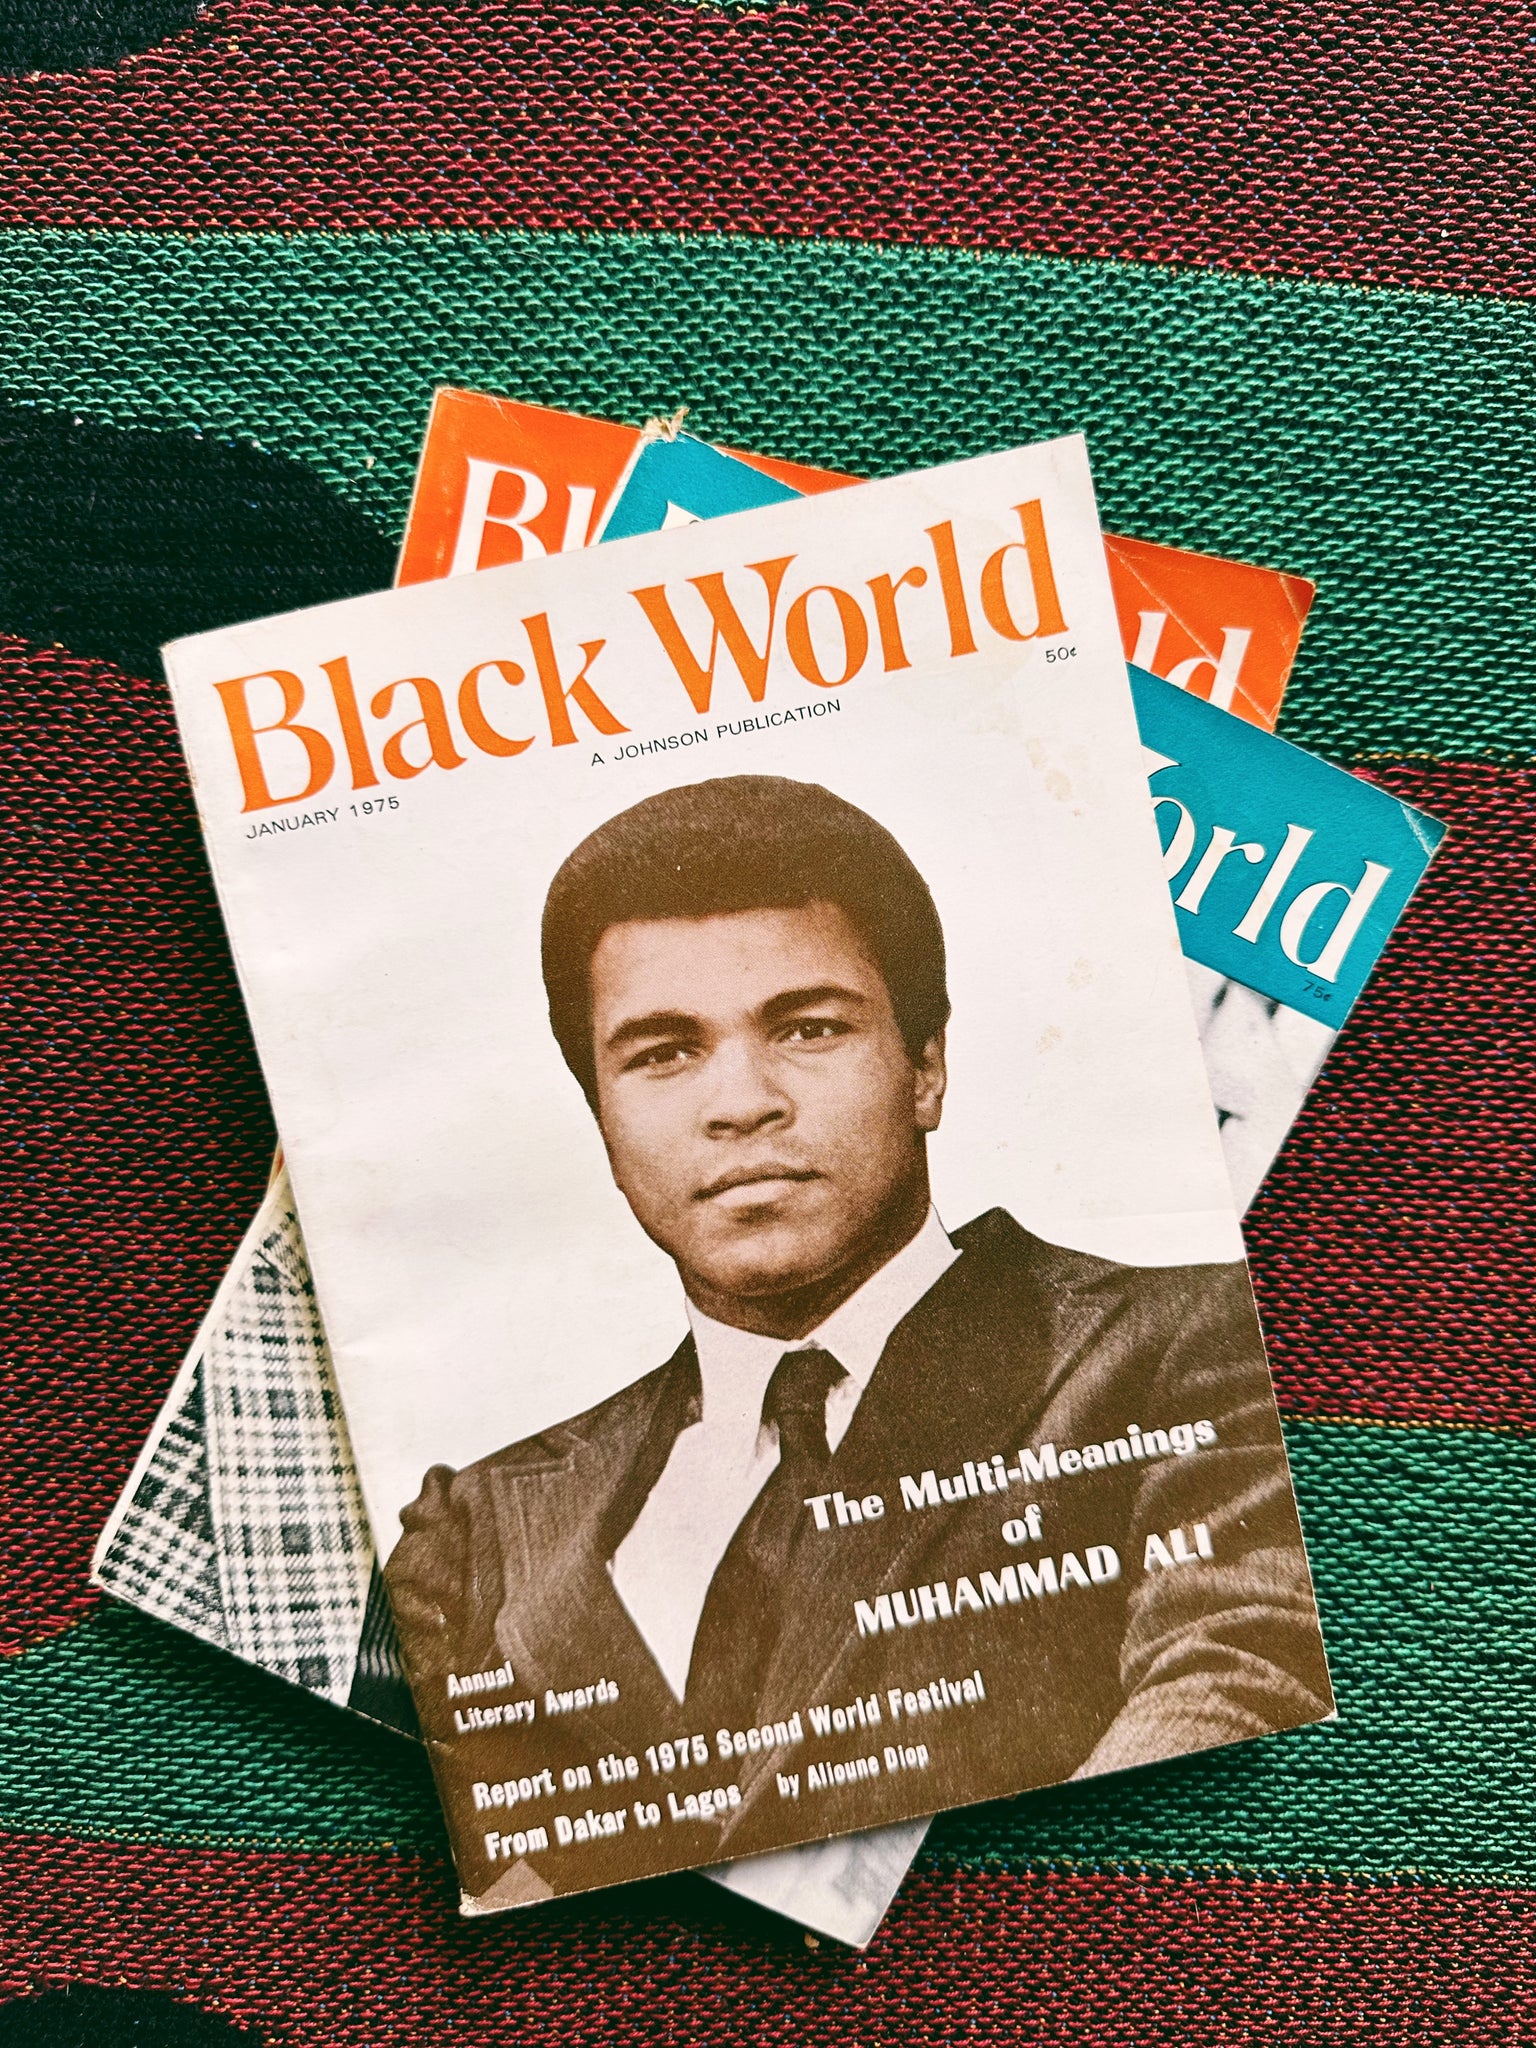 Vintage Black World Magazine // Please Select